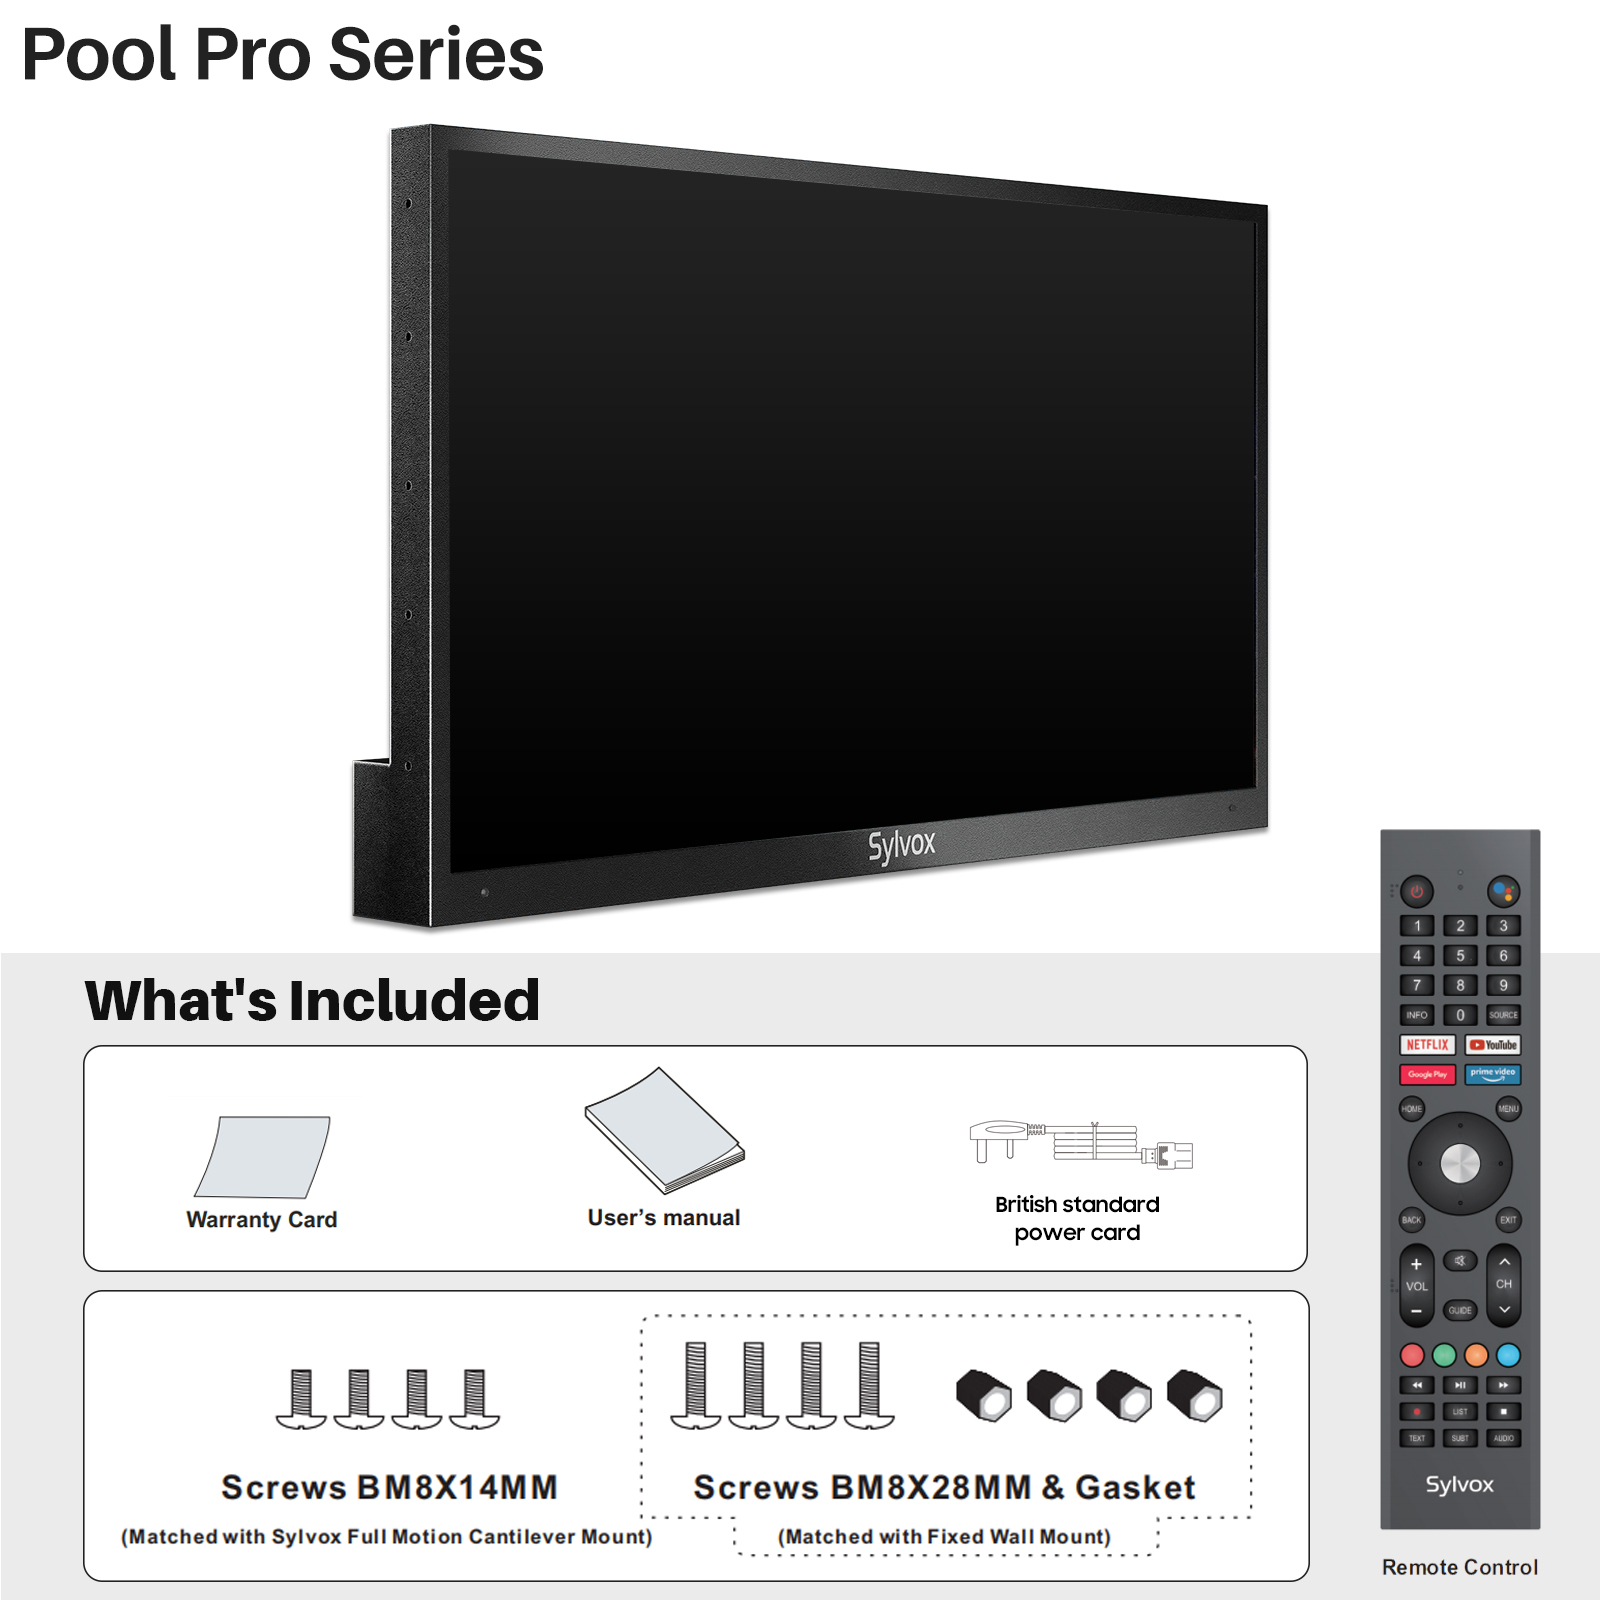 HDR SYLVOX OT65A2KEGE-EU SMART Pool / LED Outdoor cm, 4K, Zoll (Flat, 65 Zoll TV TV) 165,1 TV pro 65